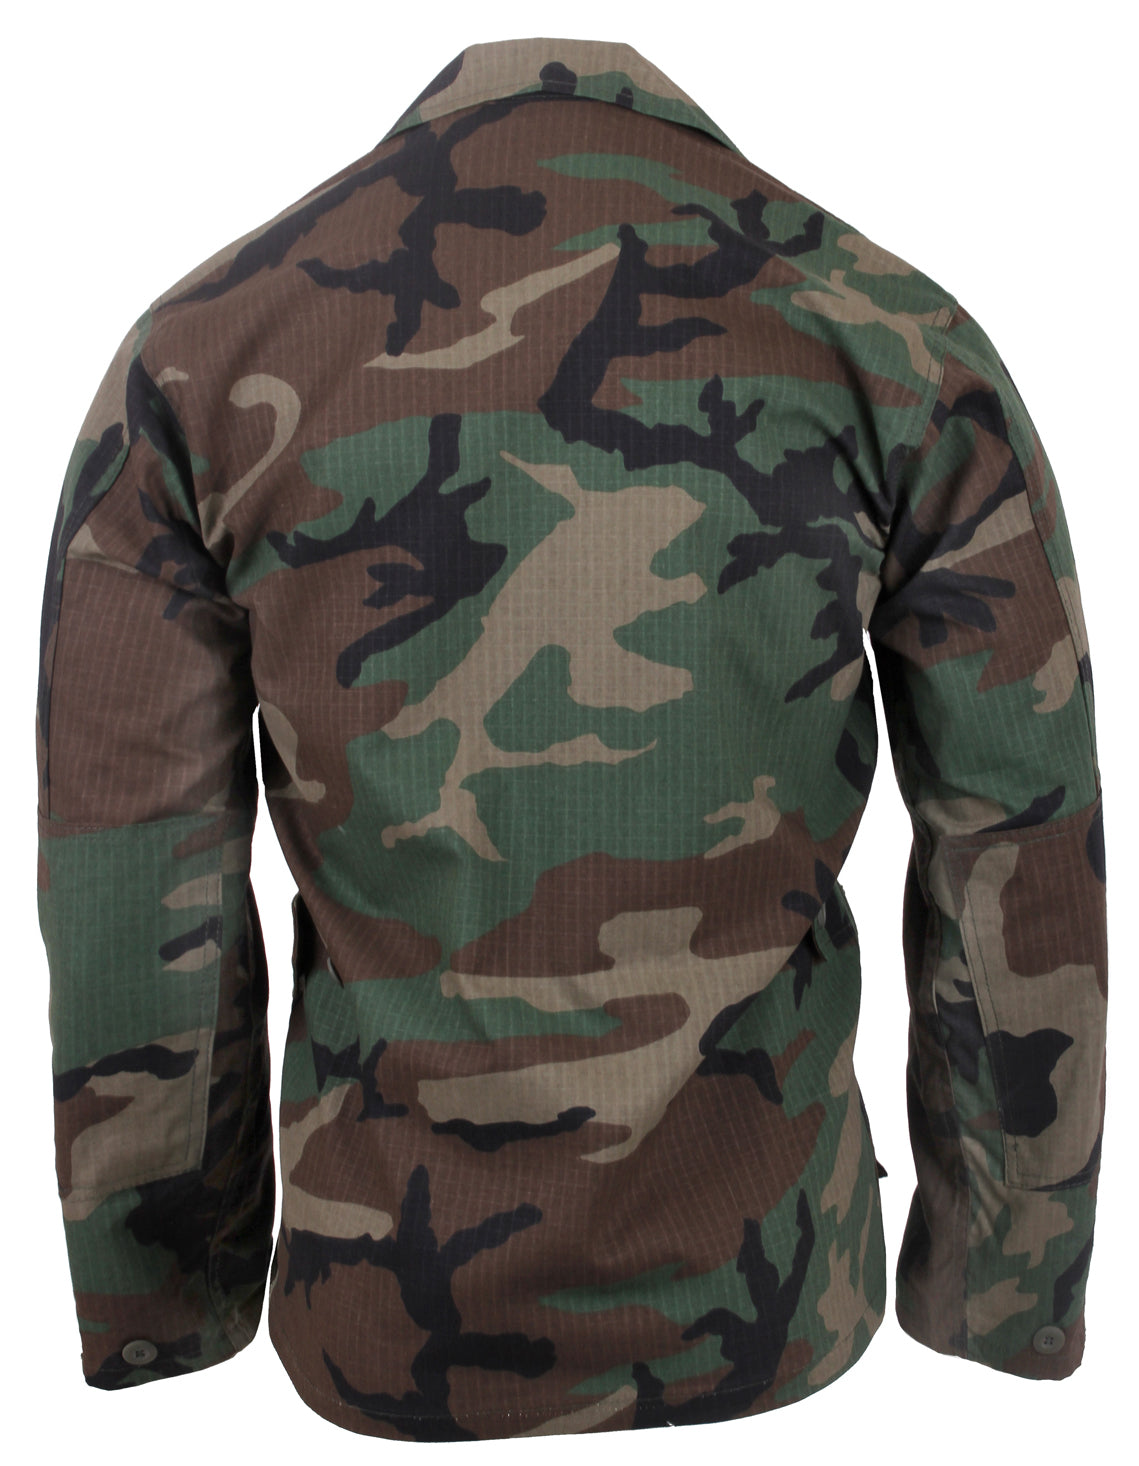 Camo Cotton Rip-Stop Tactical BDU Shirts